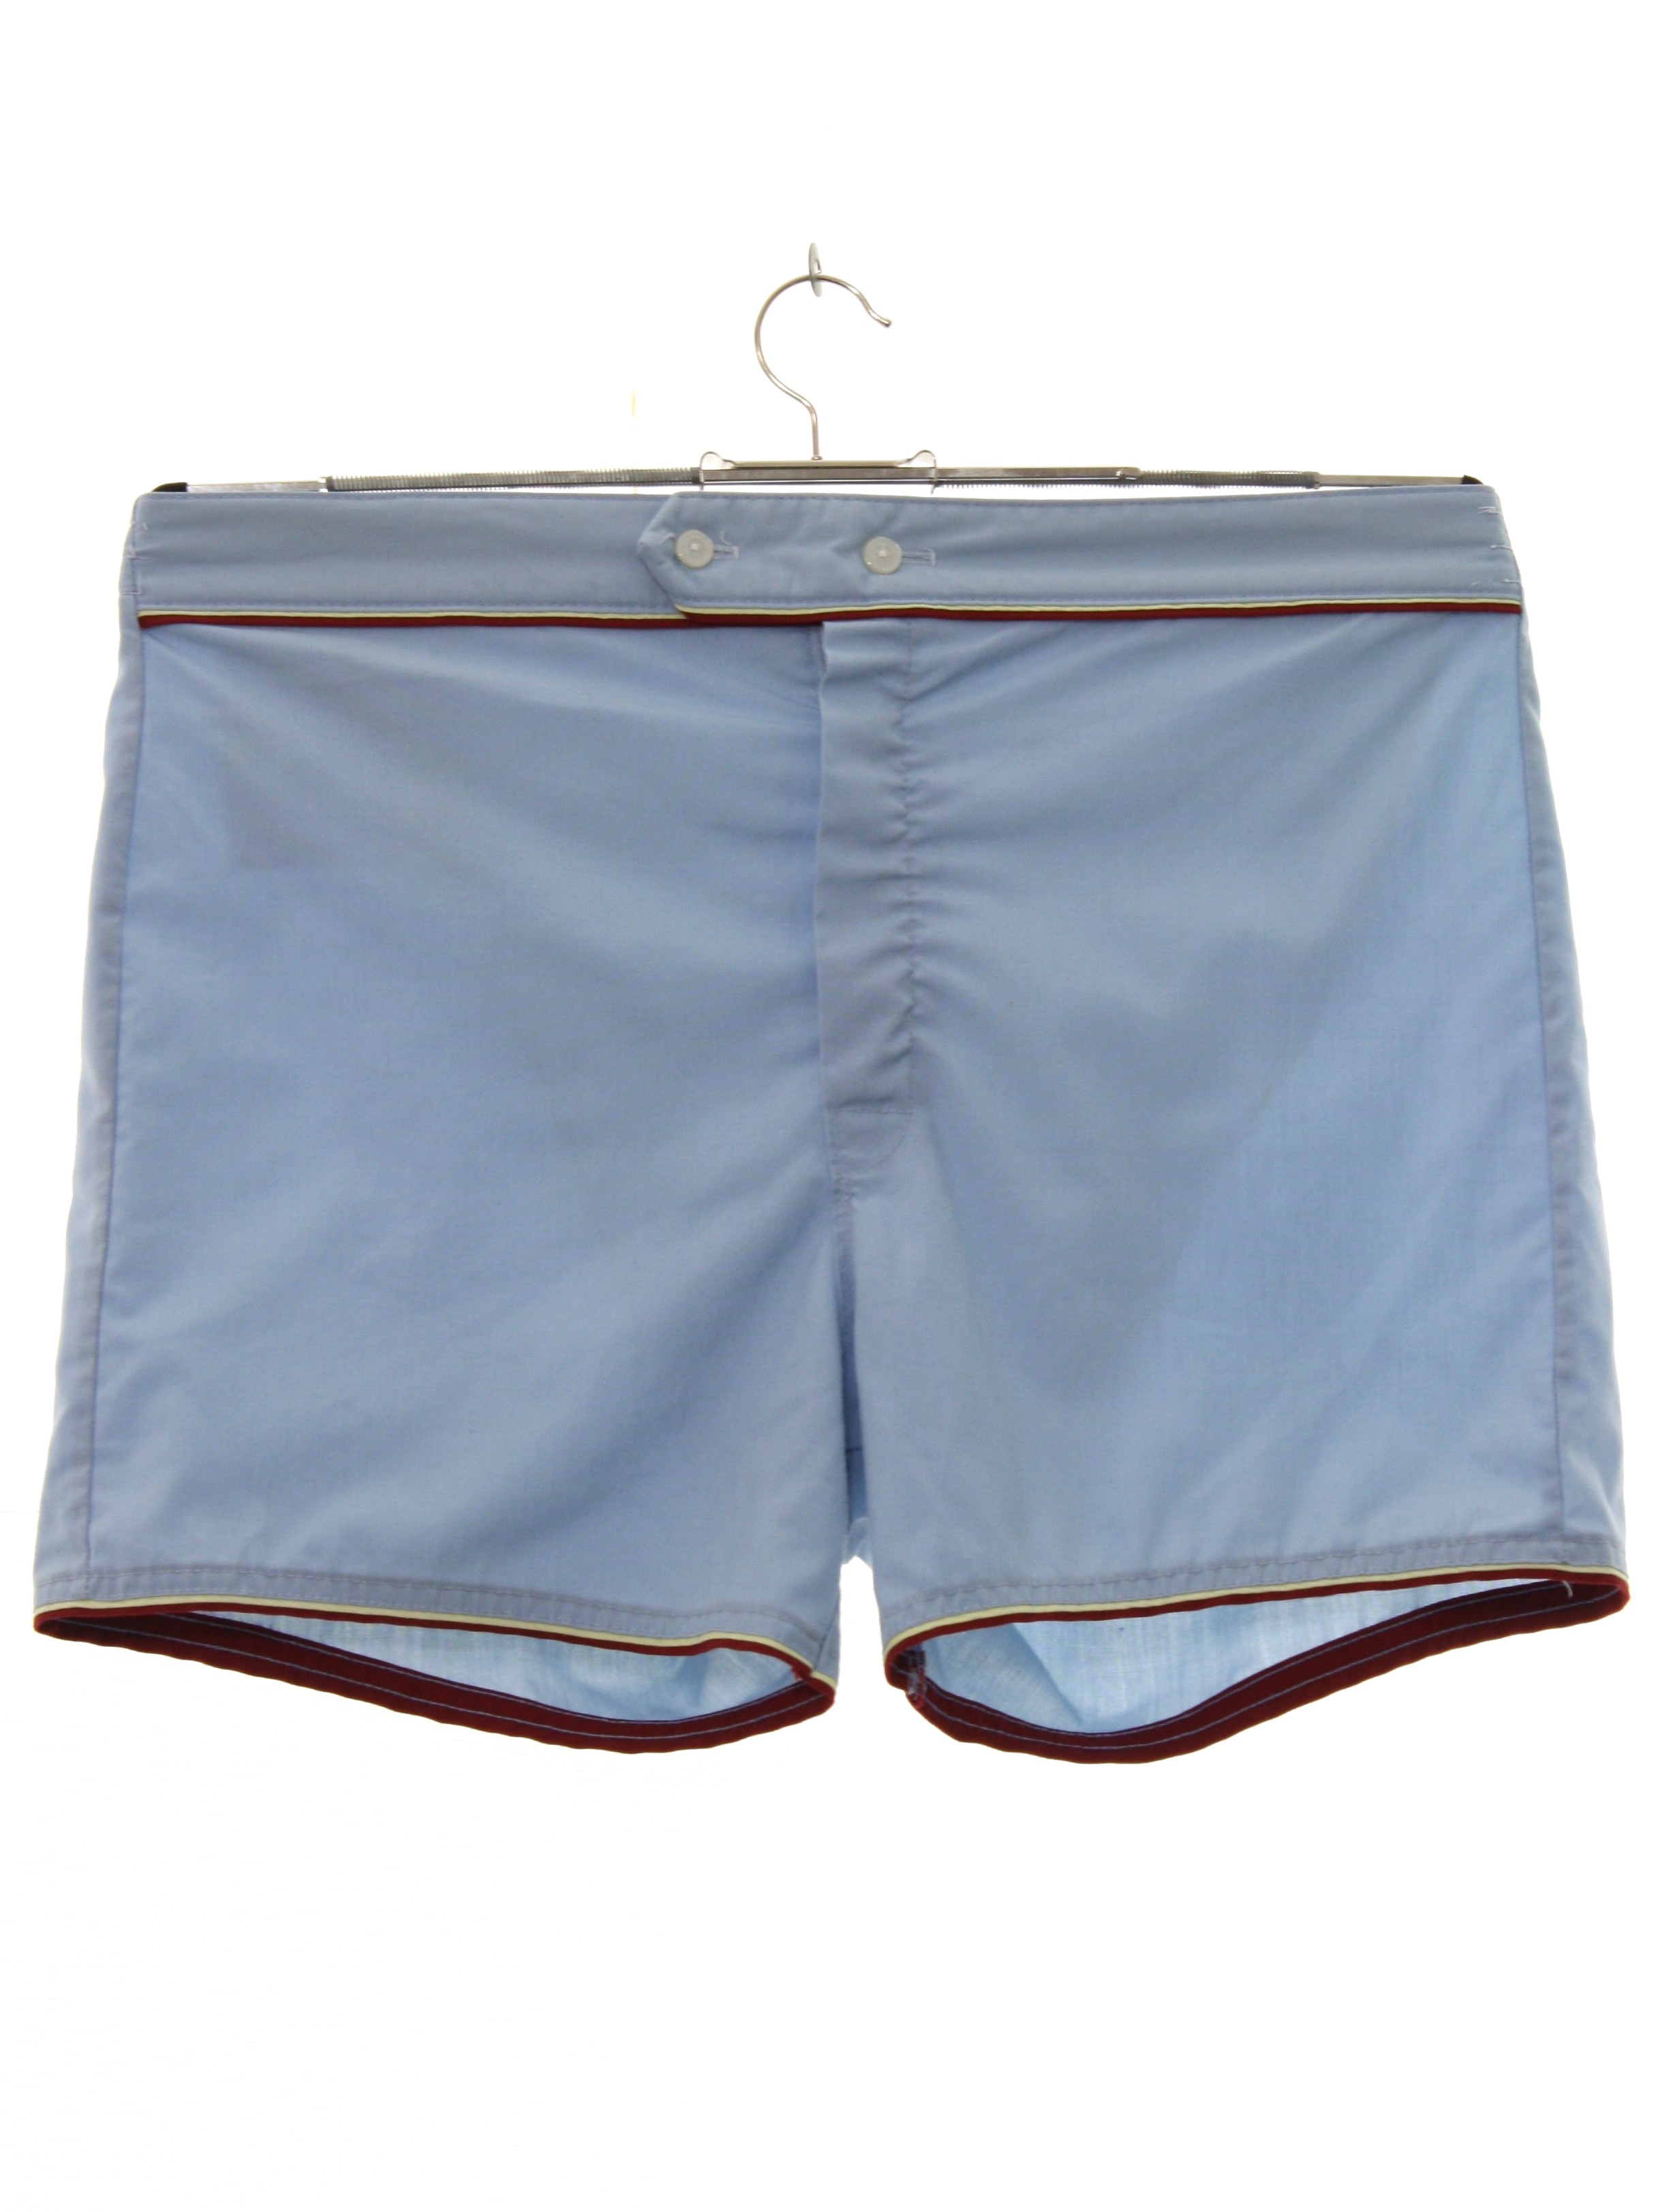 60's Vintage Swimsuit/Swimwear: 60s -Made in USA- Mens light blue ...